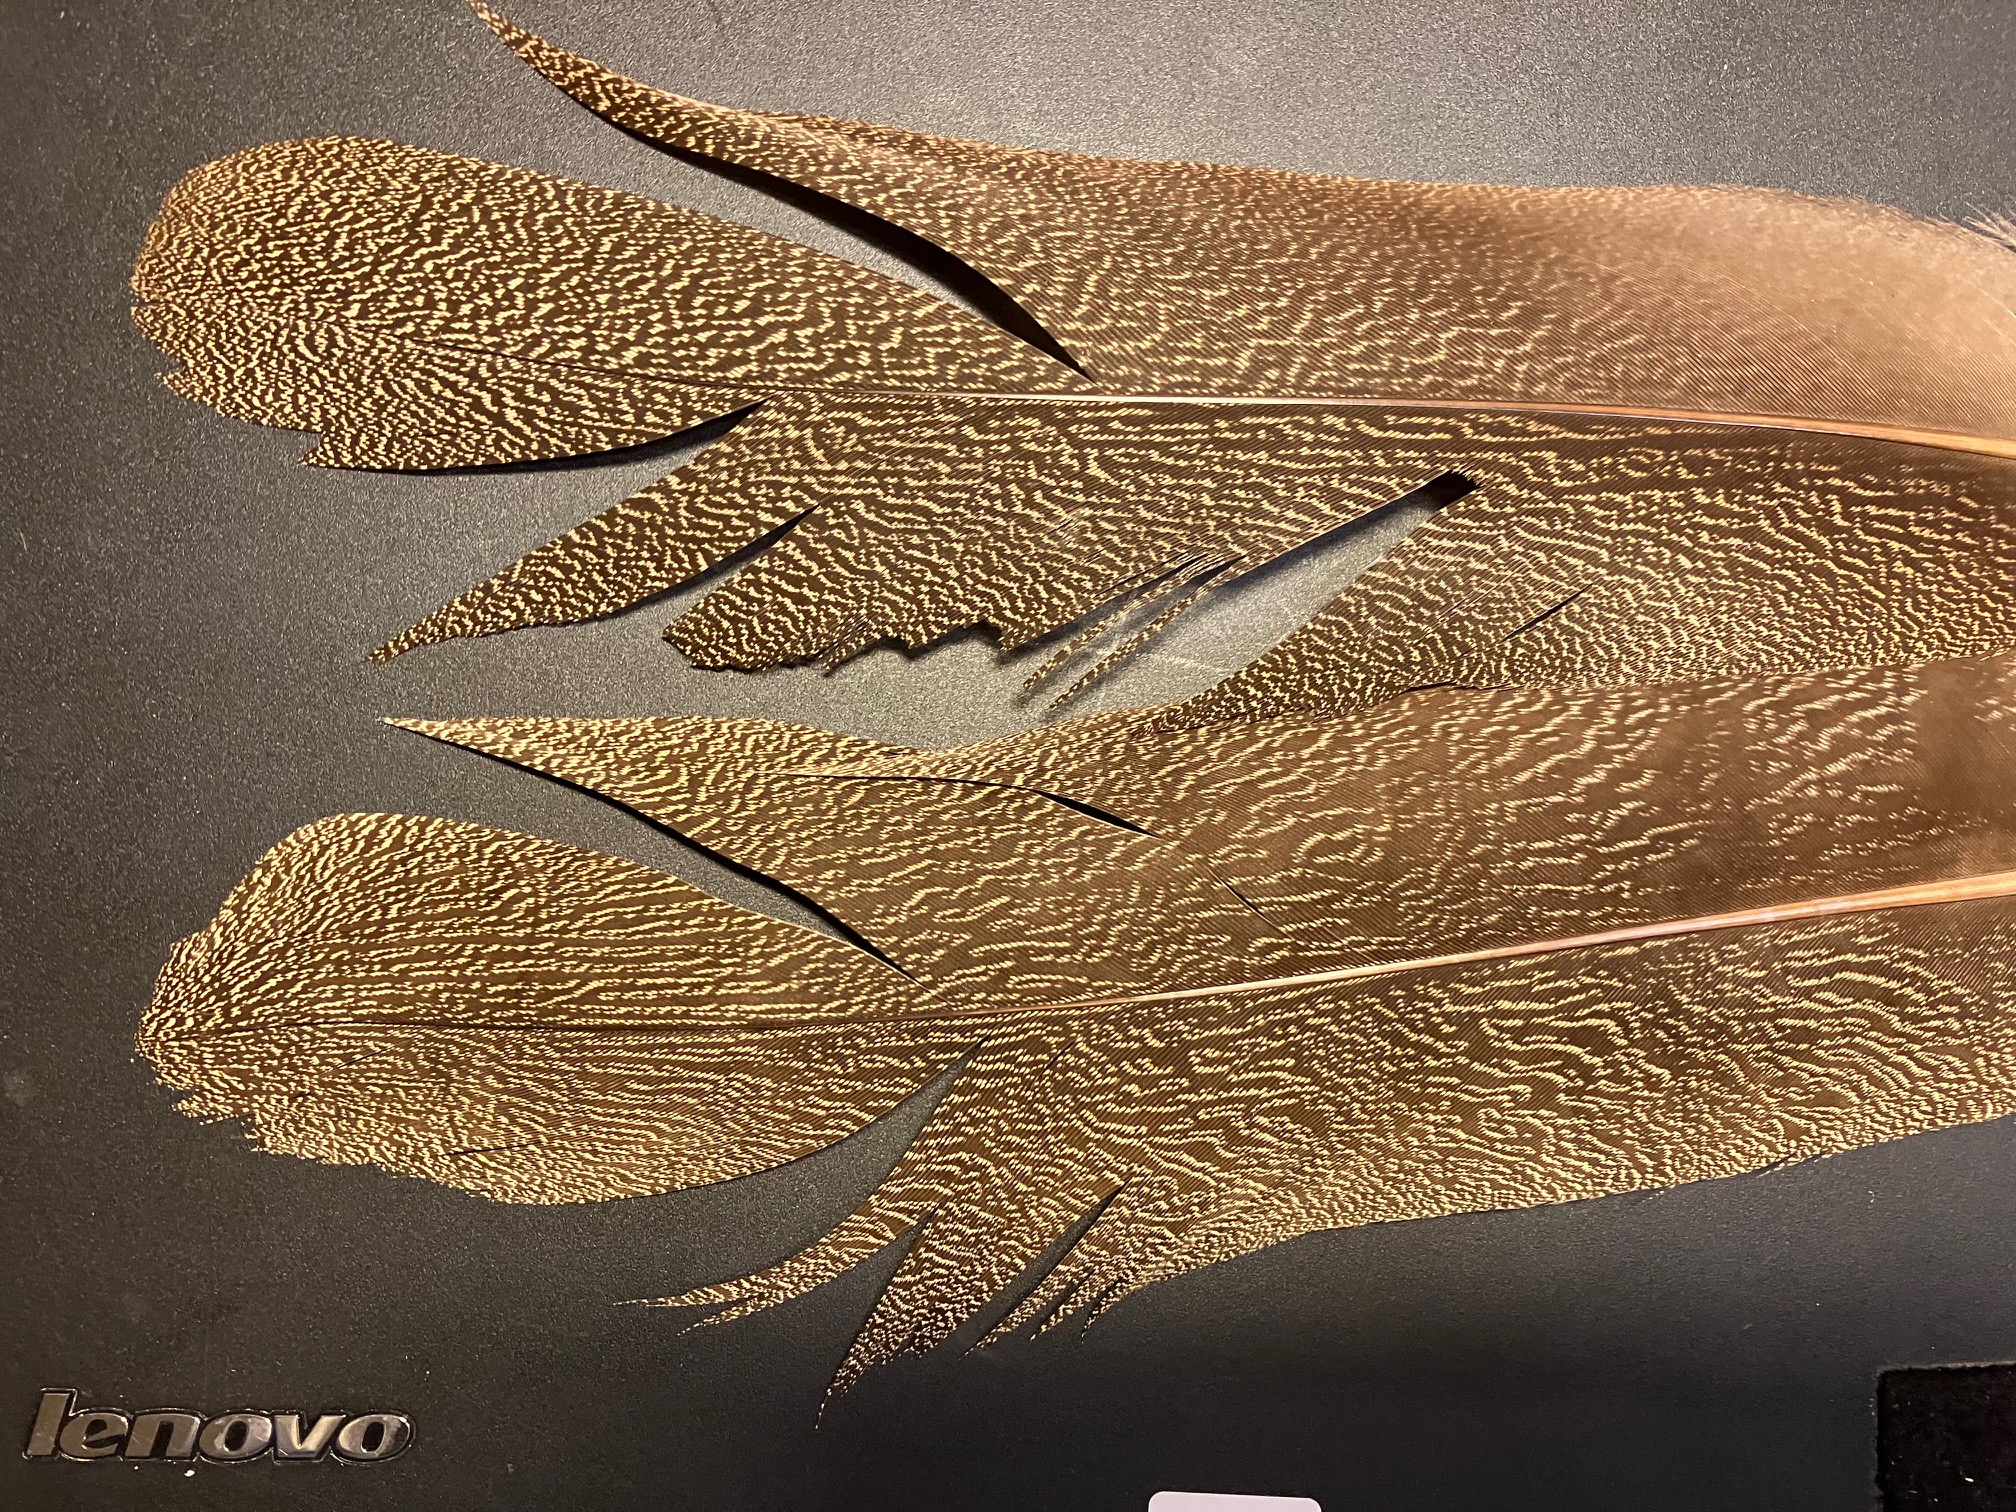 Kori bustard shoulder feather 3